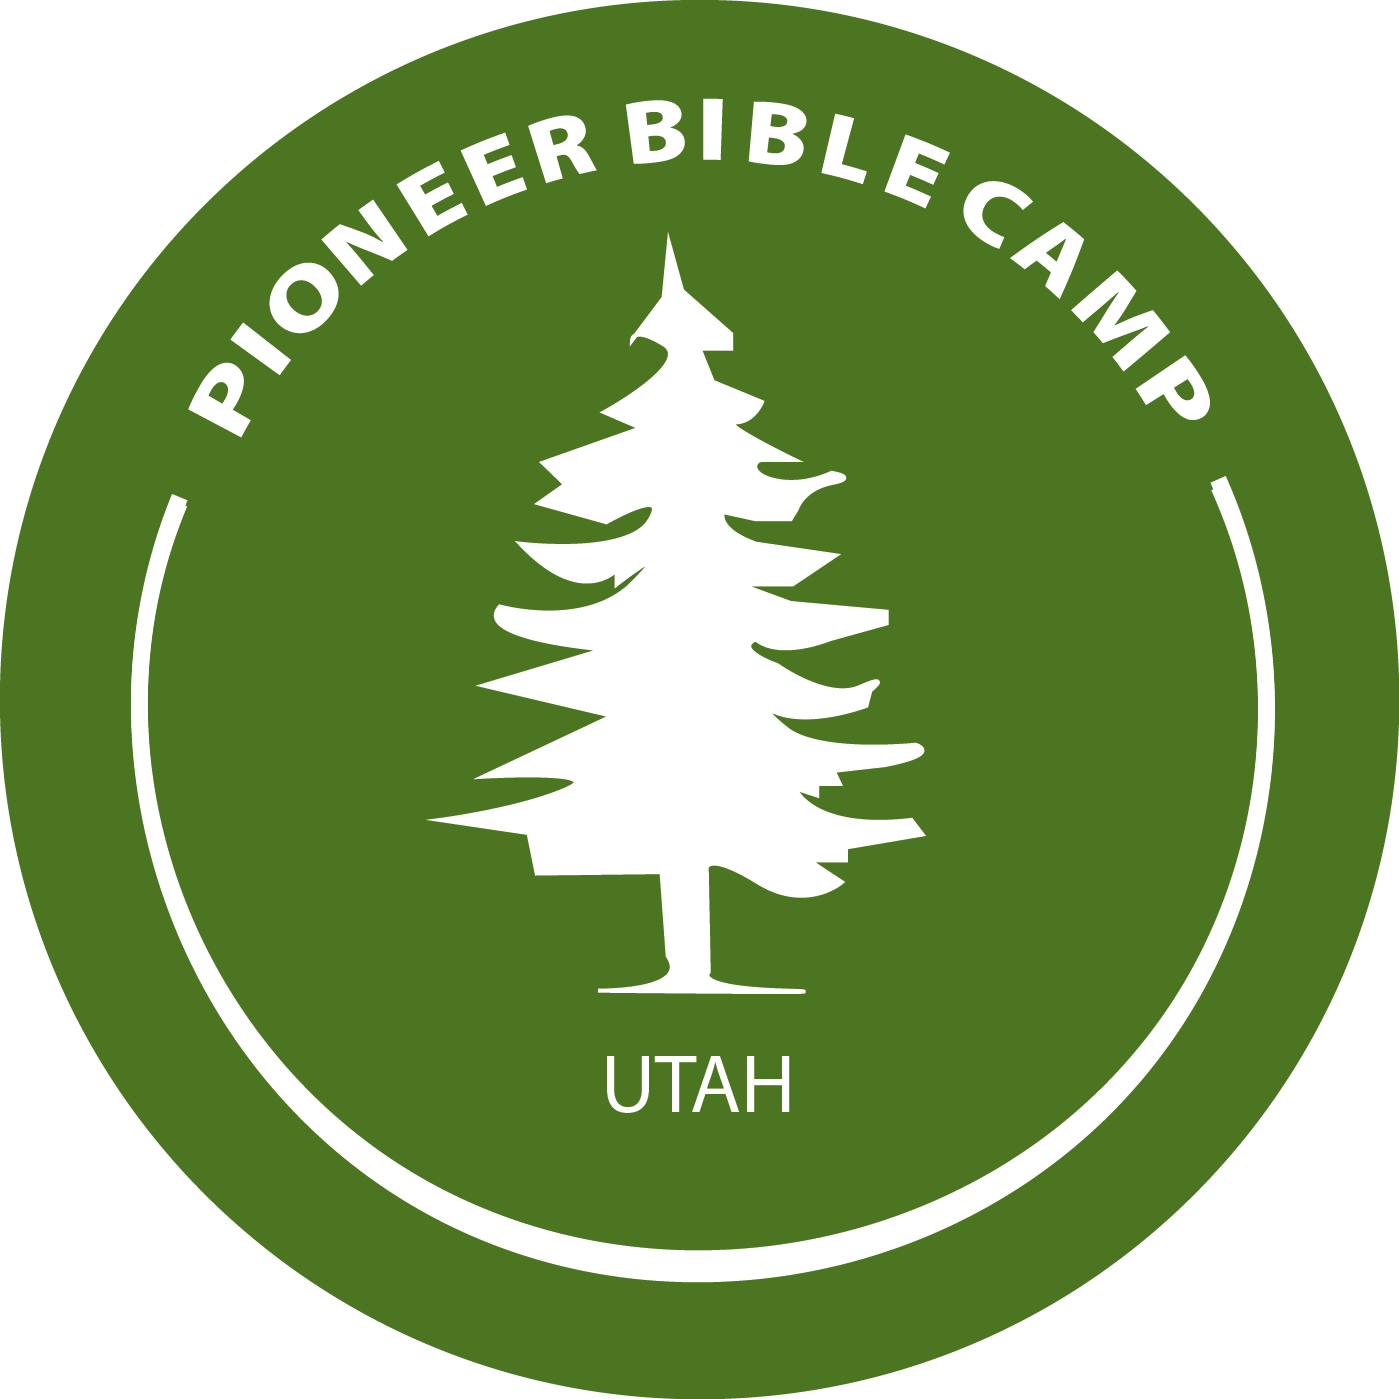 Pioneer Bible Camp